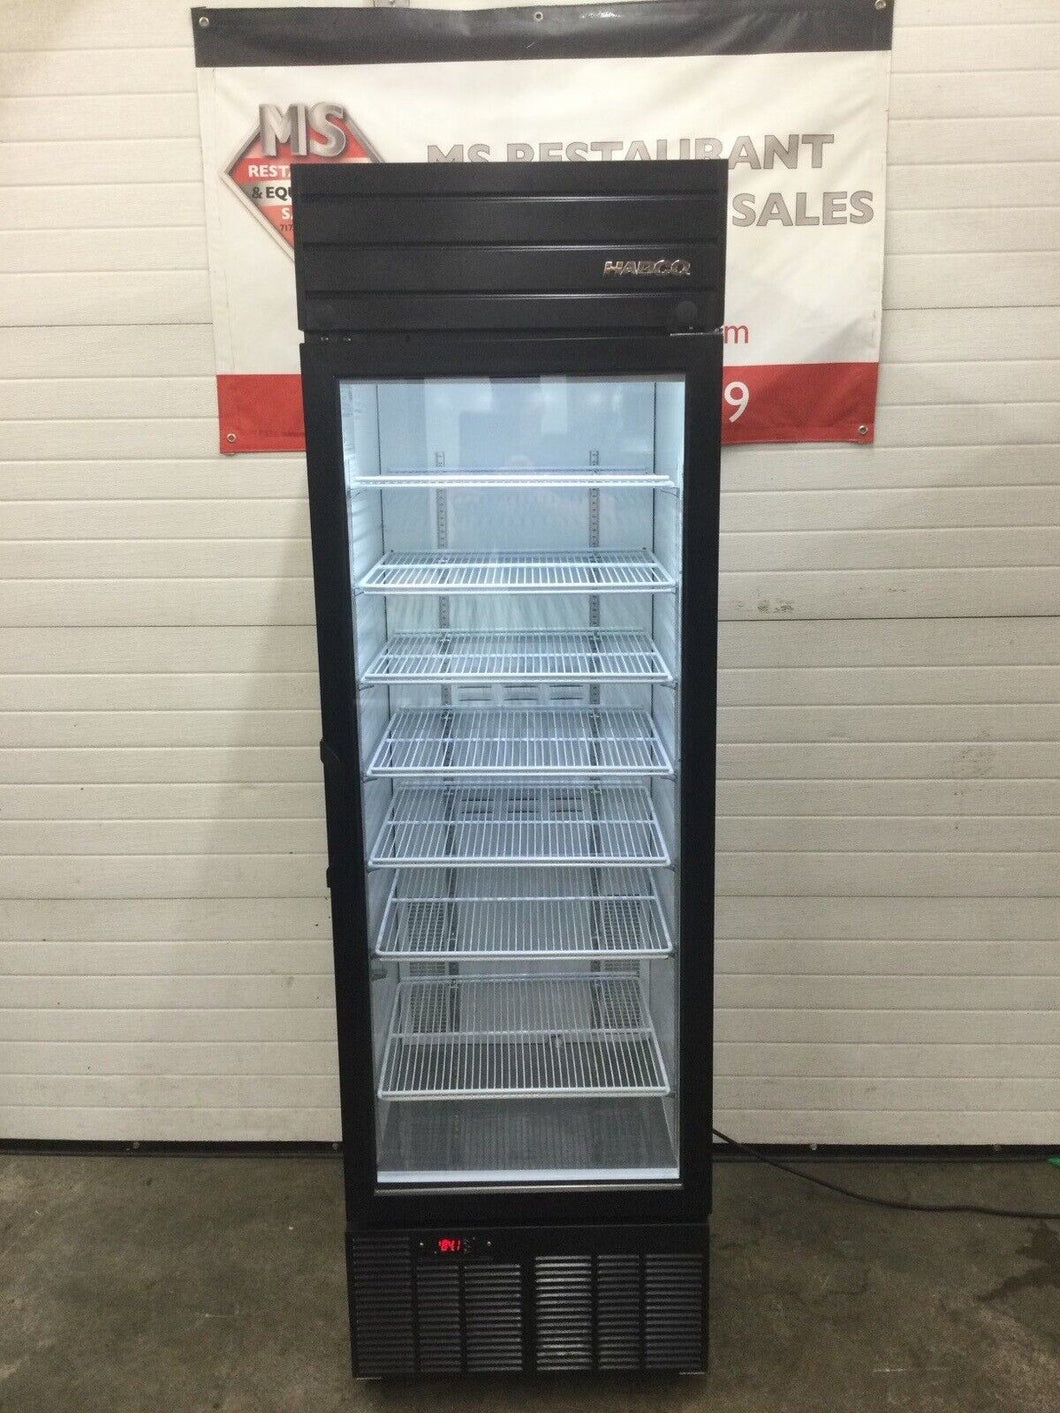 Habco SE18 Glass Door Merchandiser / Cooler Fully Refurbished Tested and Working!